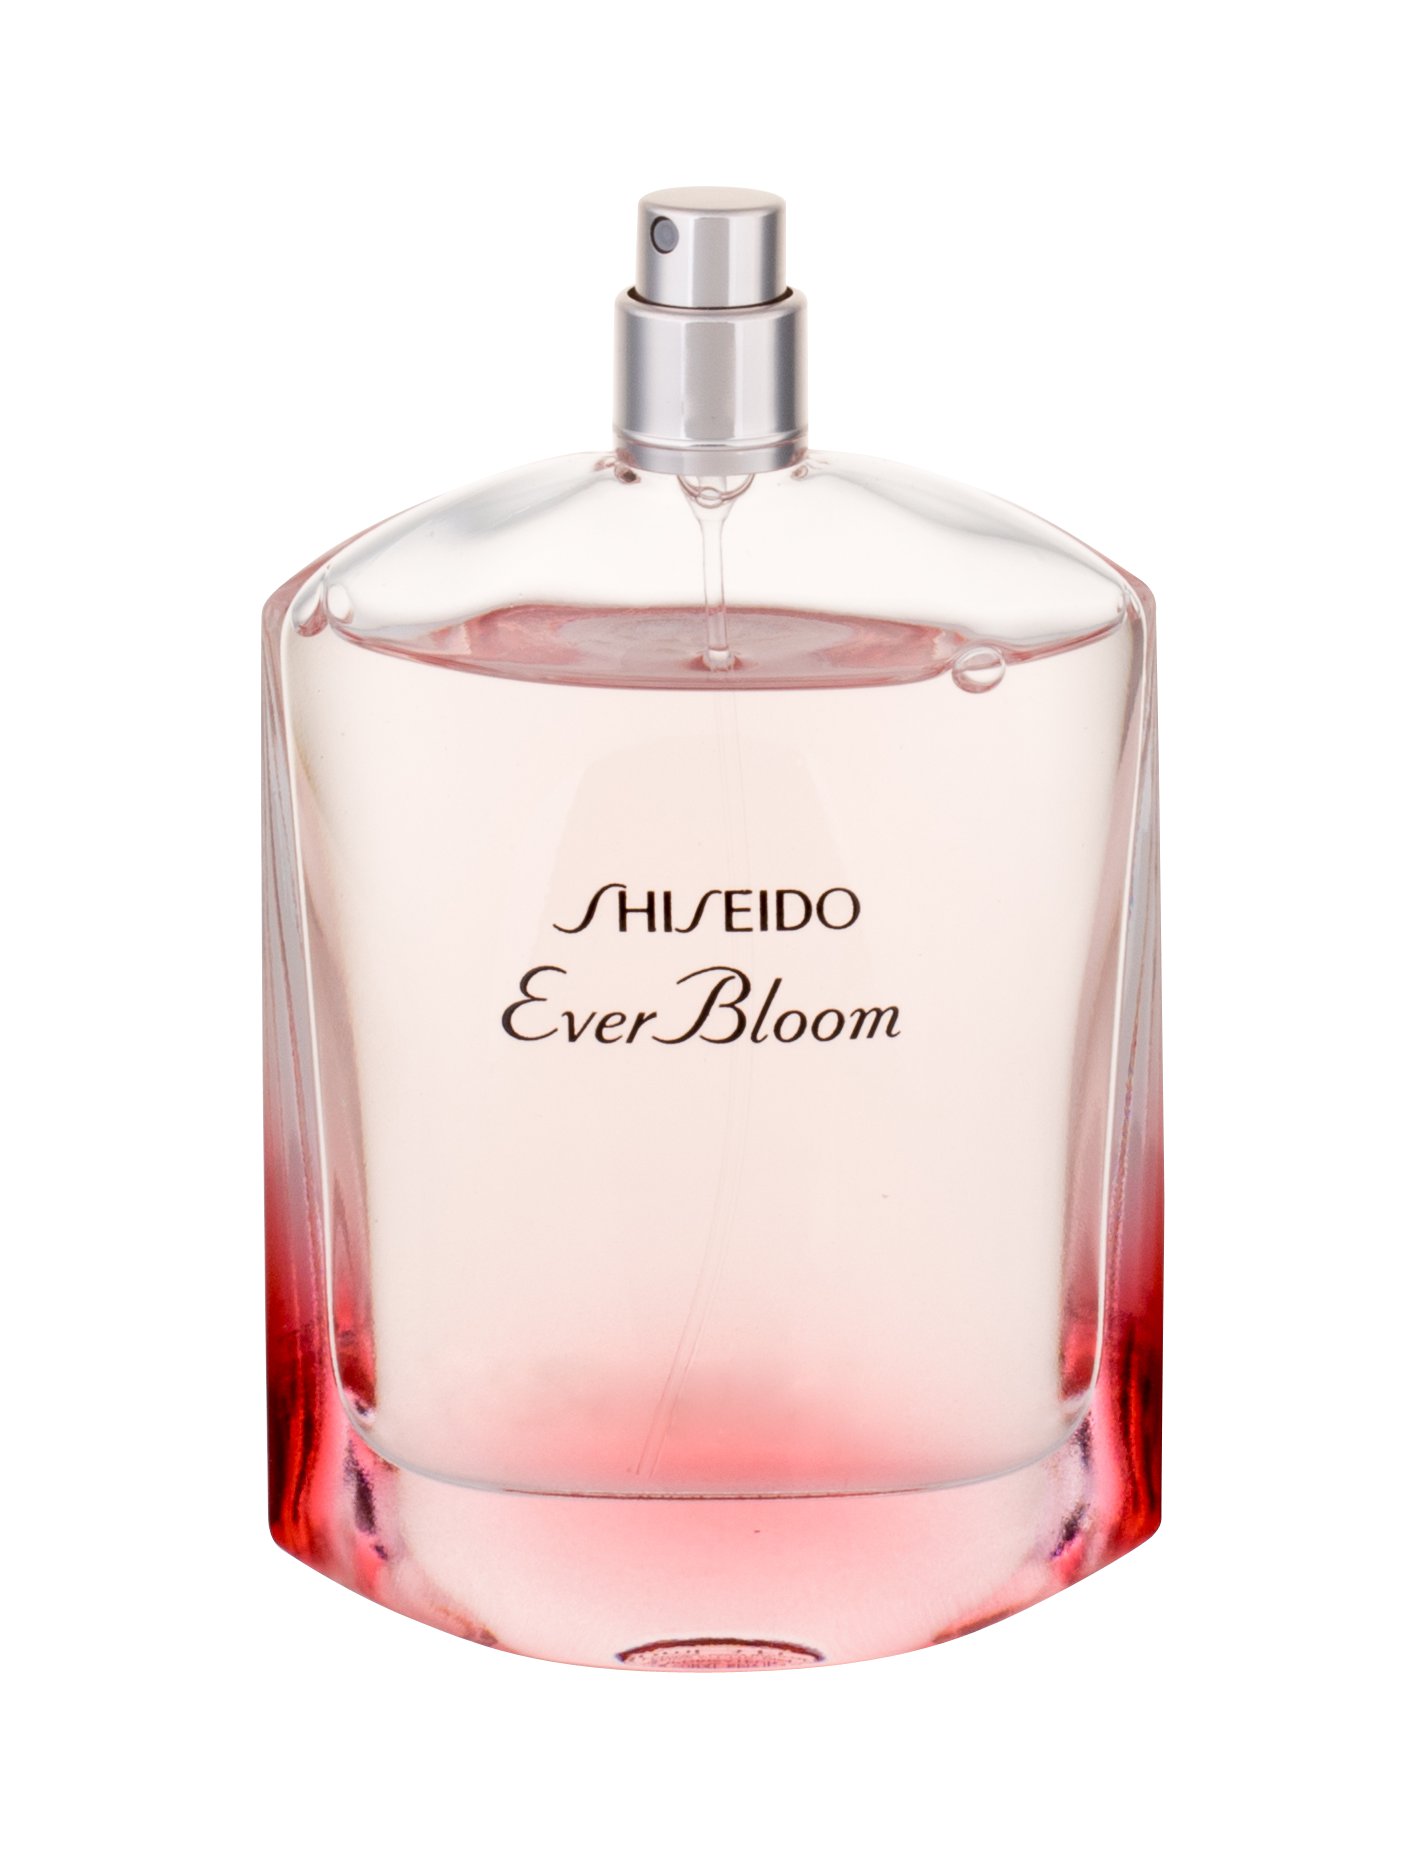 Shiseido Ever Bloom, Parfumovaná voda 90ml, Tester